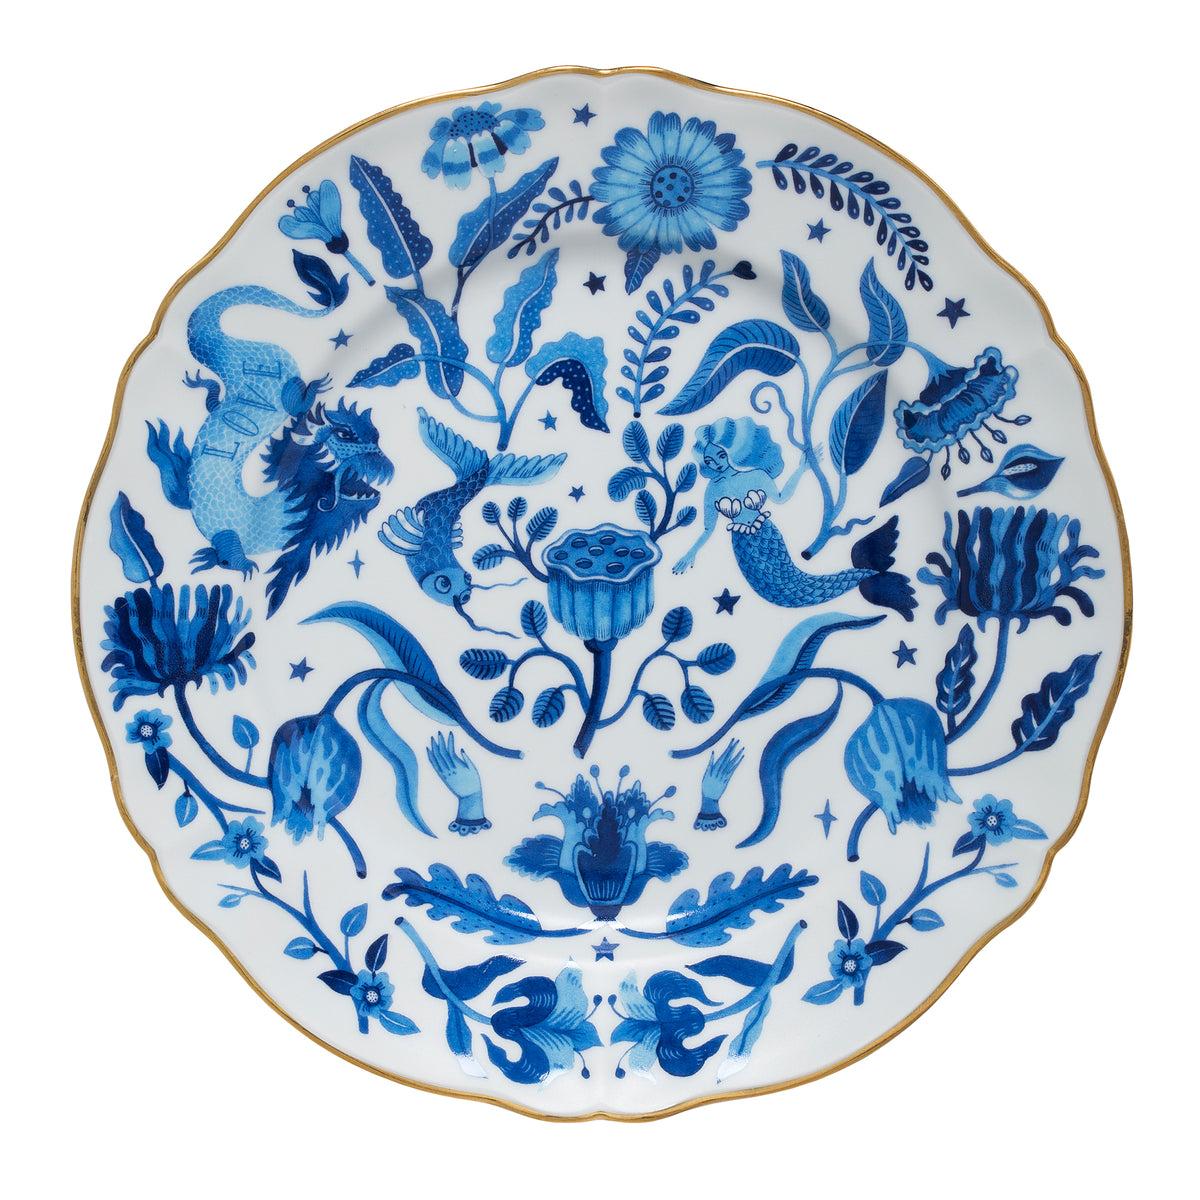 LOVE Porcelain Plate. 26 cm